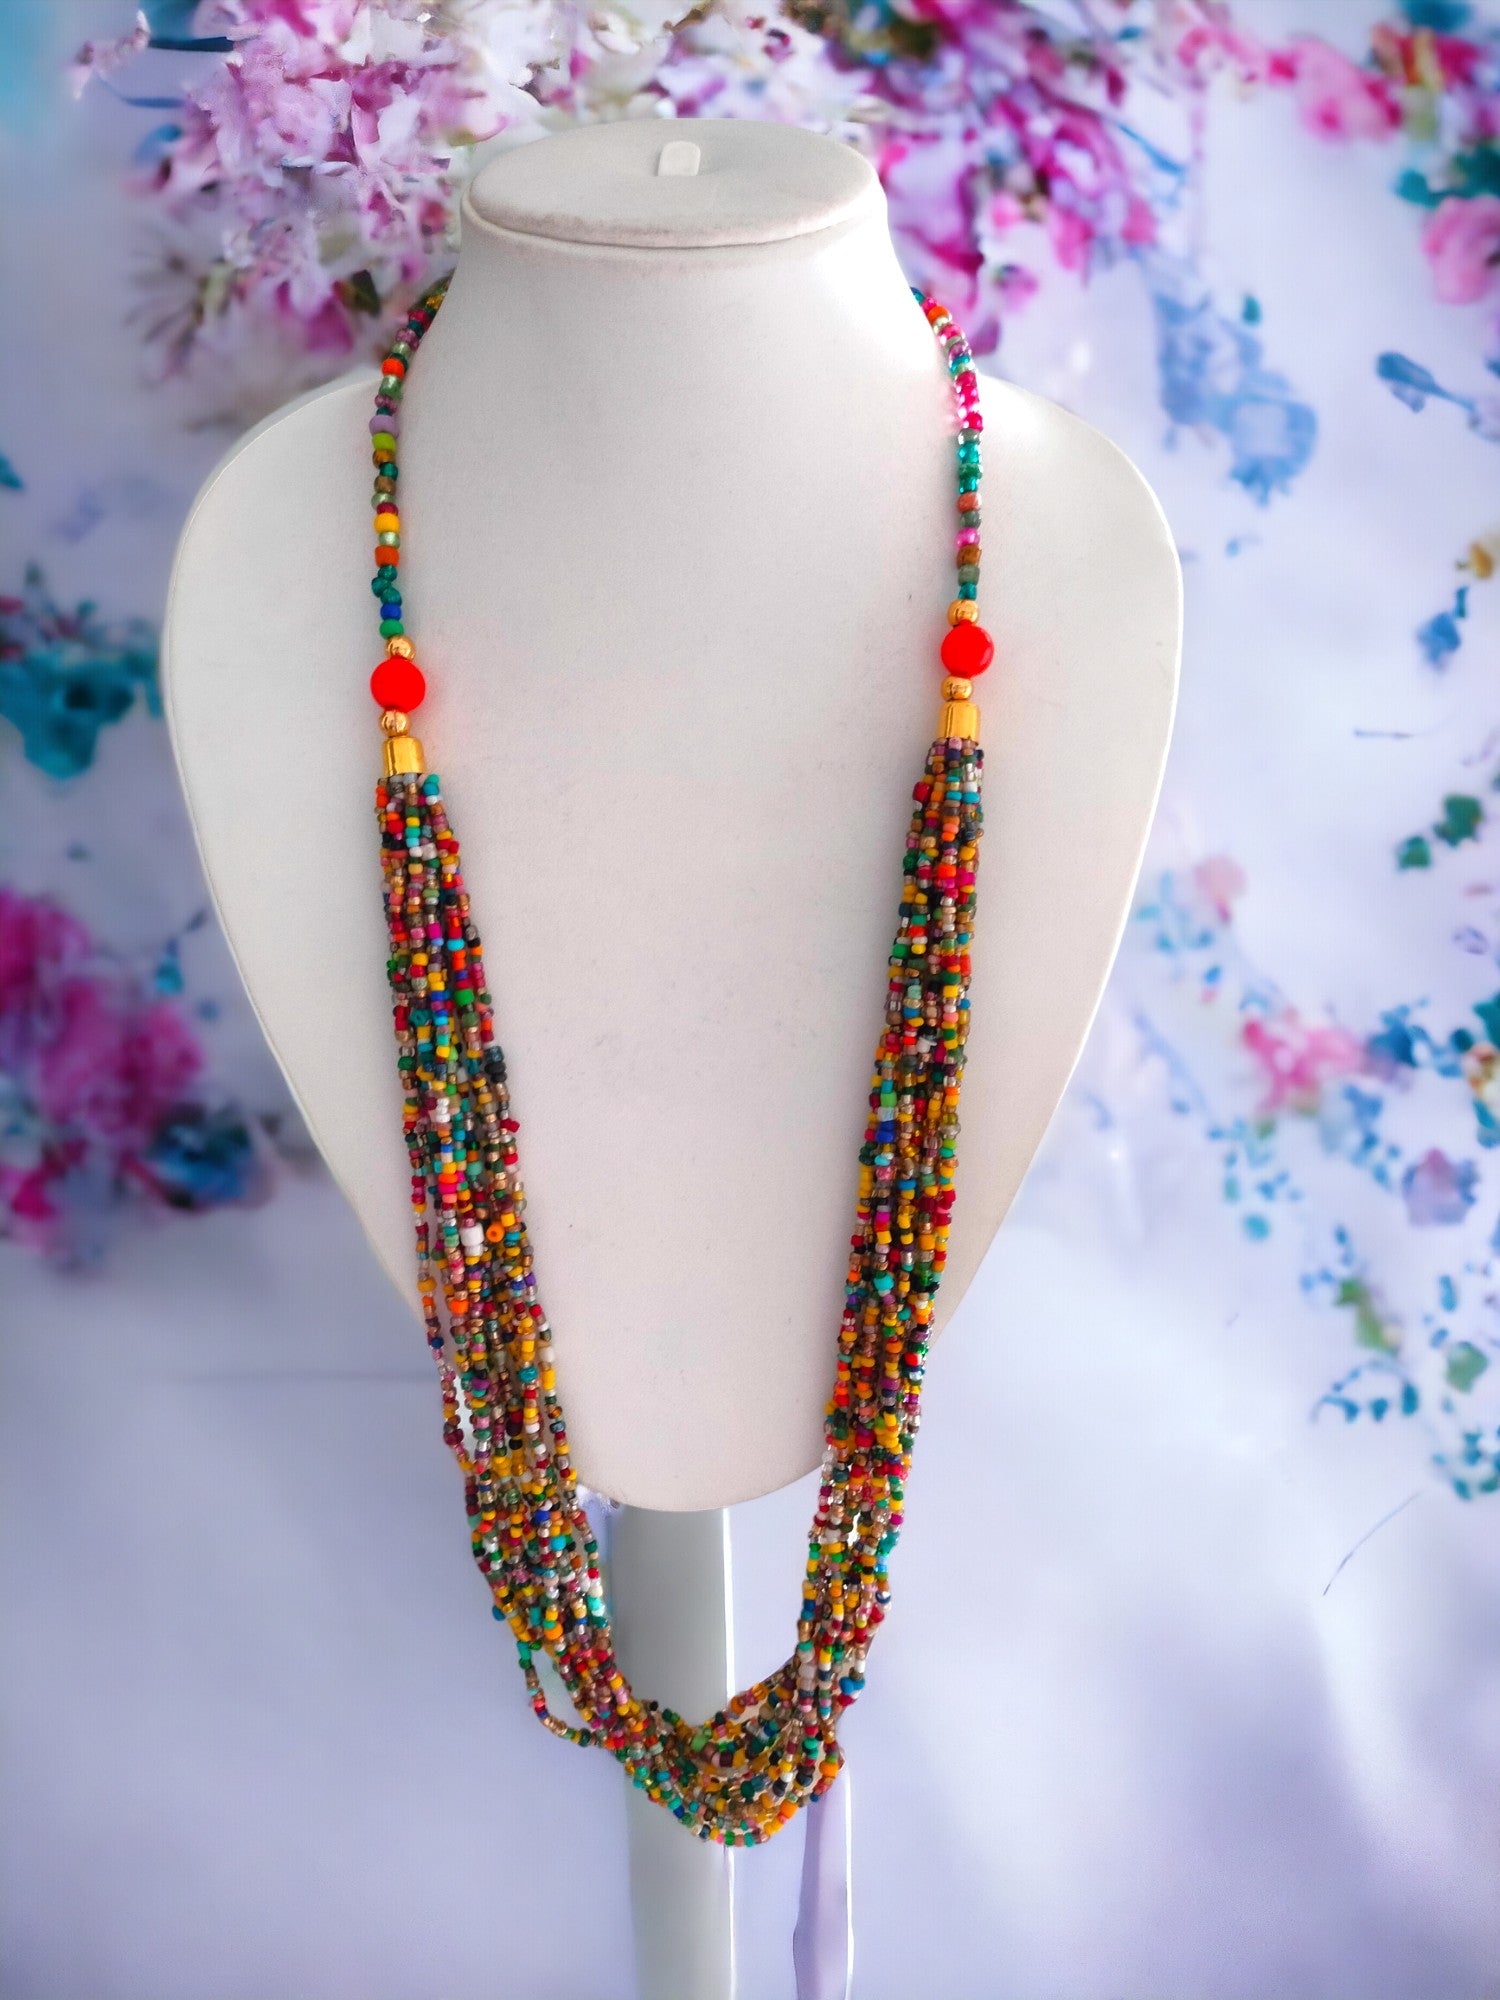 Mosaic Marvel: Handmade Multi-Layered Beaded Necklace(12 Layers)